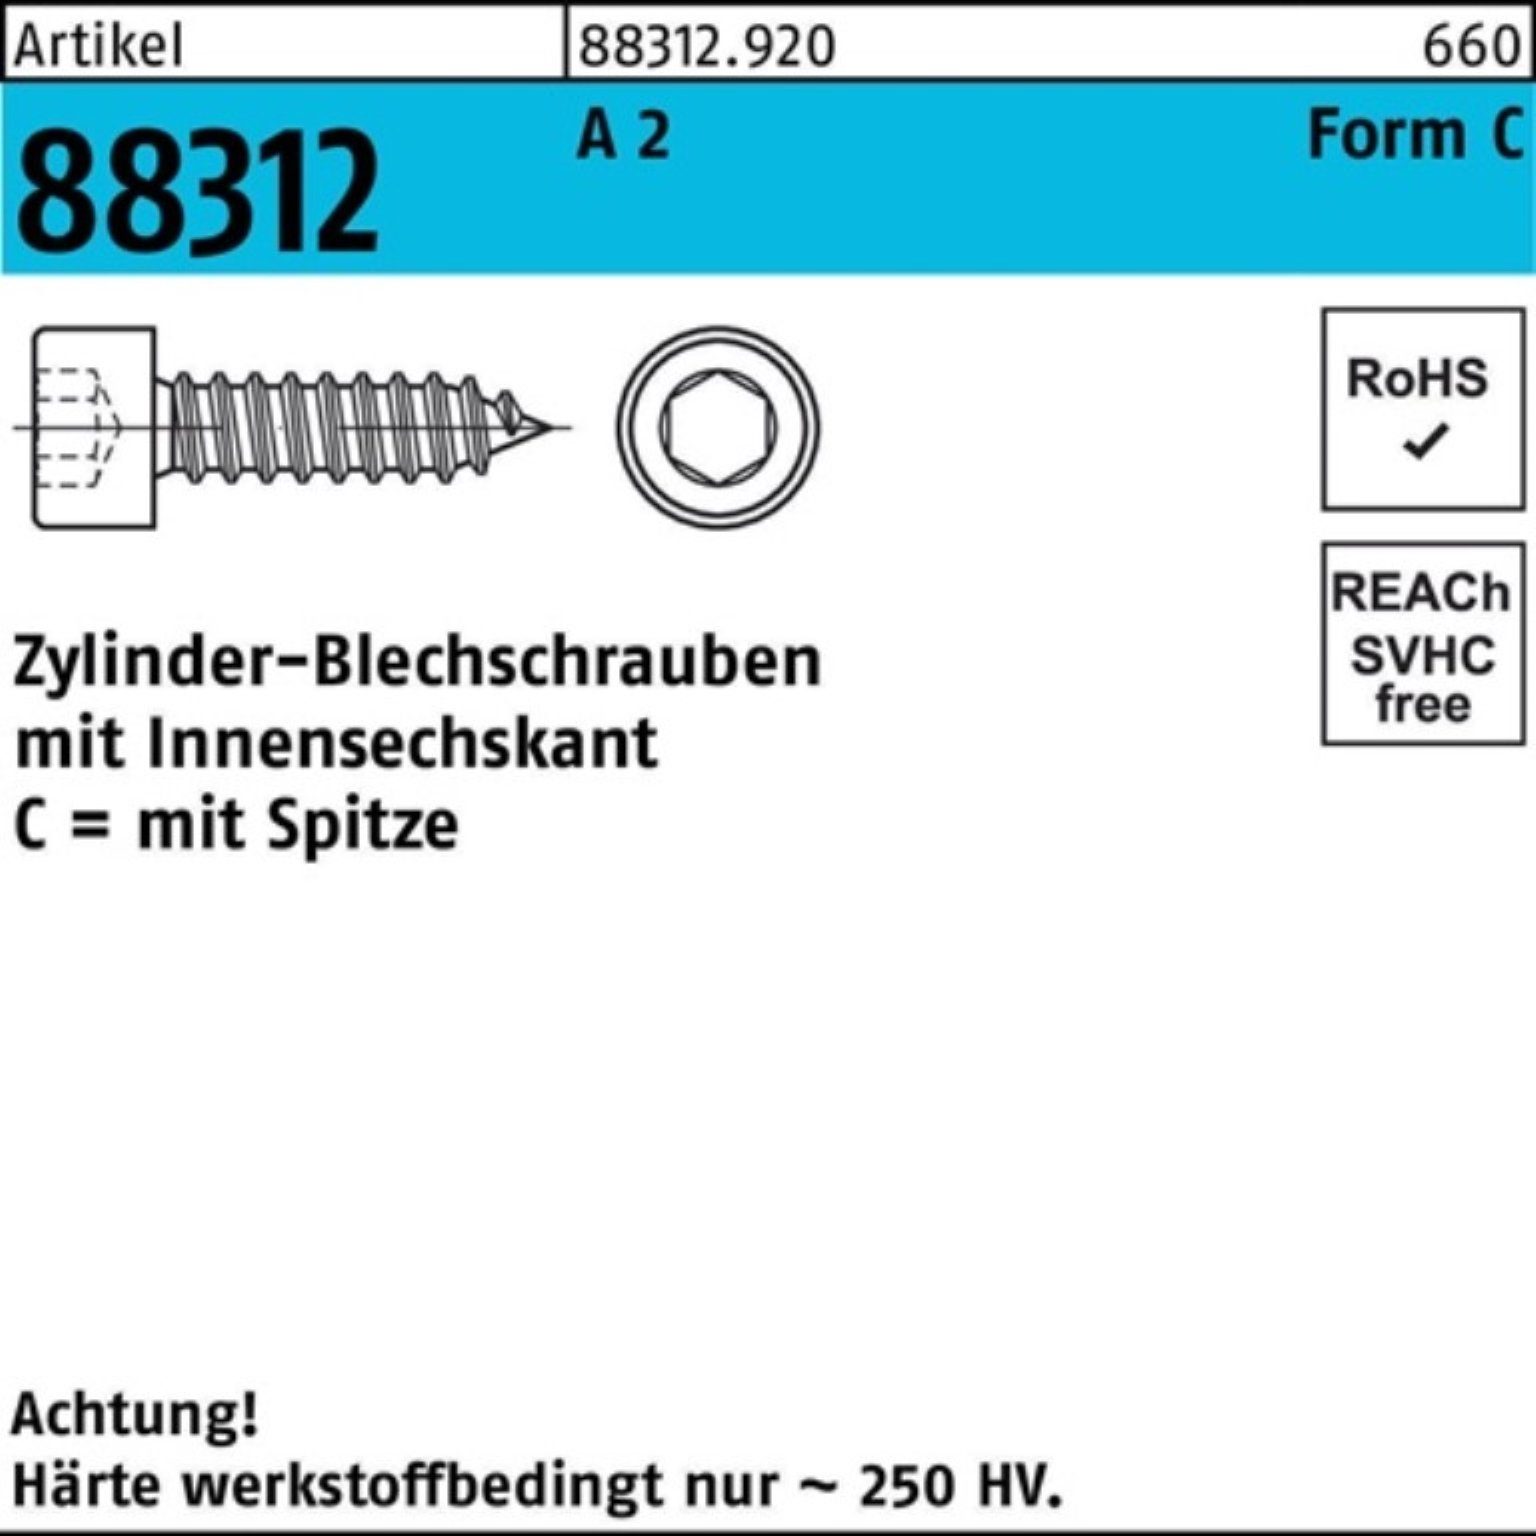 Reyher Blechschraube 500er Pack Zylinderblechschraube R 88312 Spitze/Innen-6kt C 6,3x 25 A